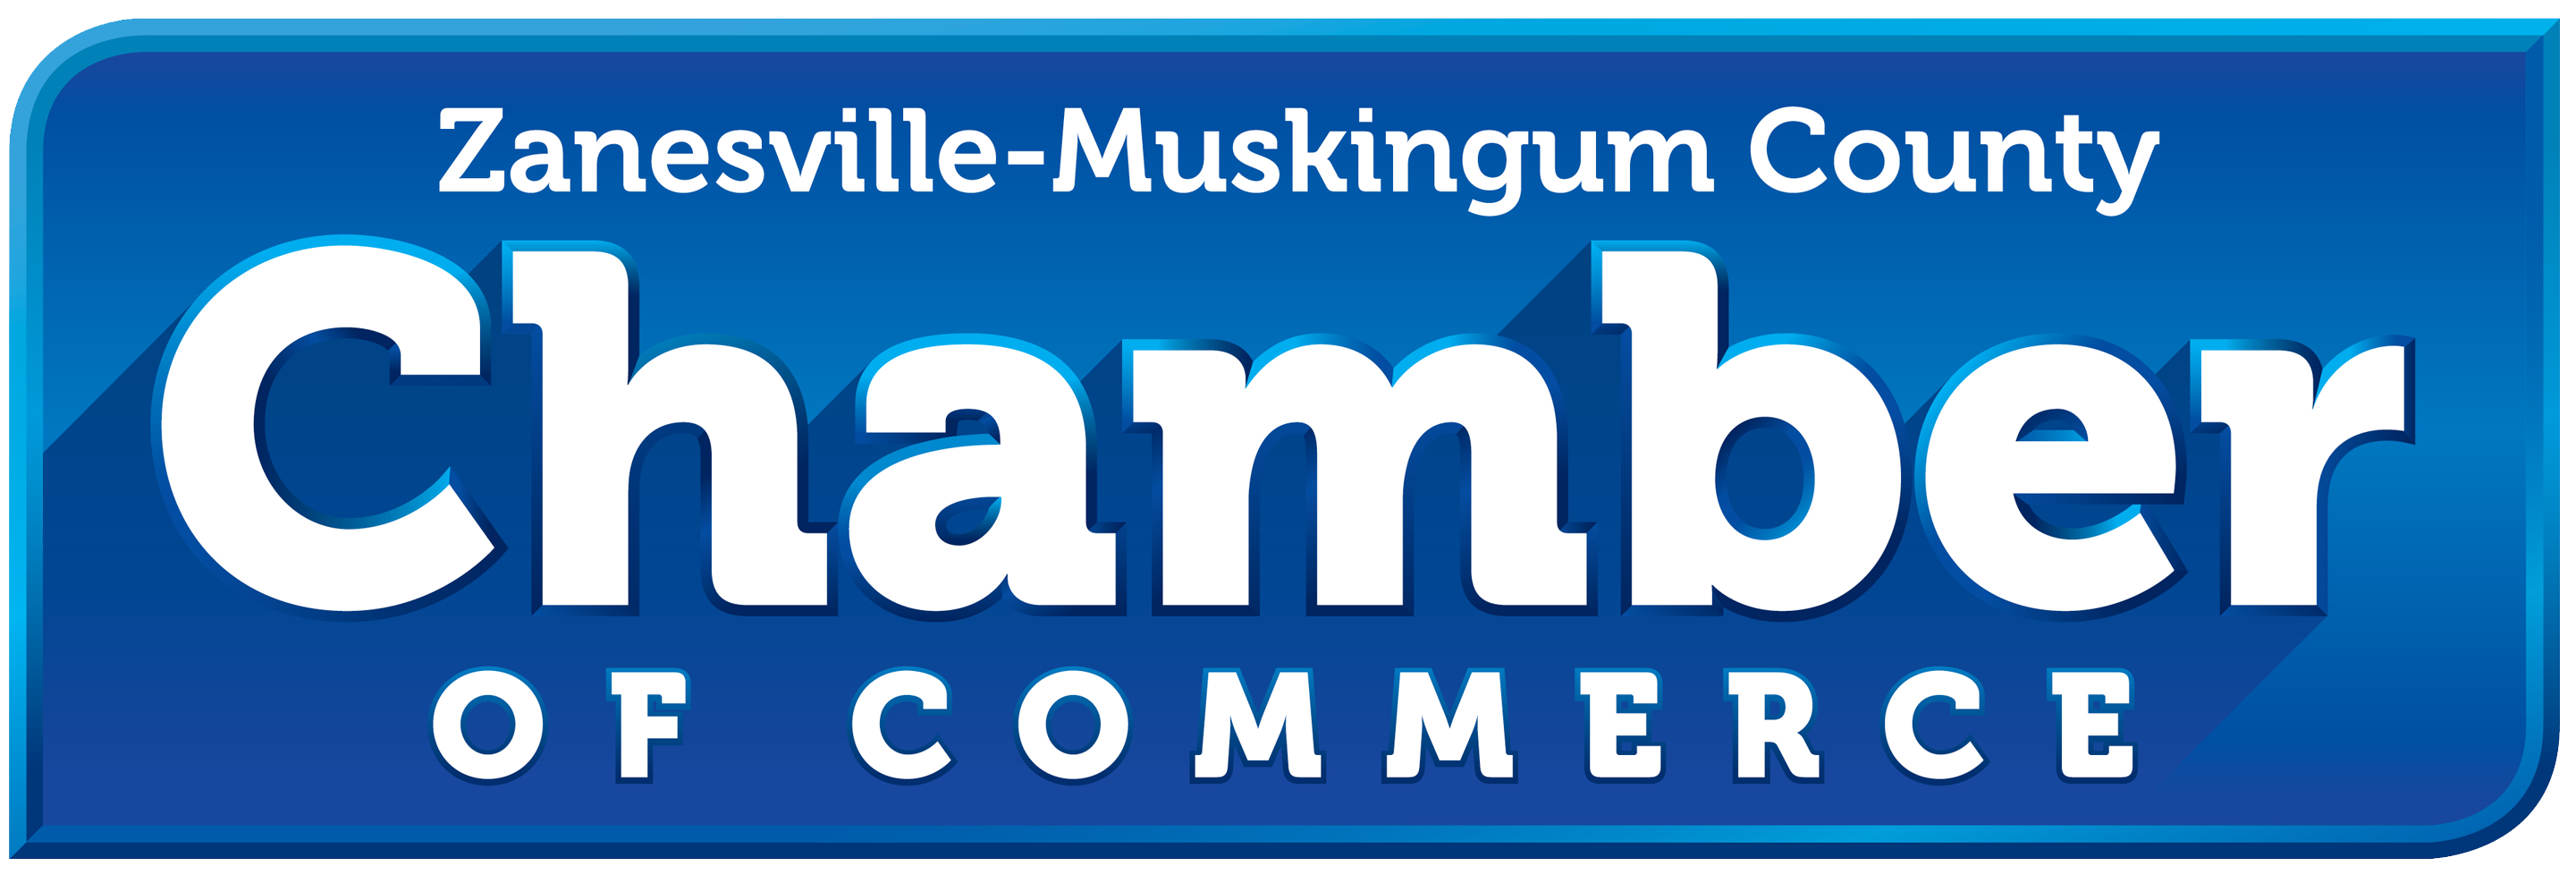 Zanesville-Muskingum County Chamber of Commerce member logo